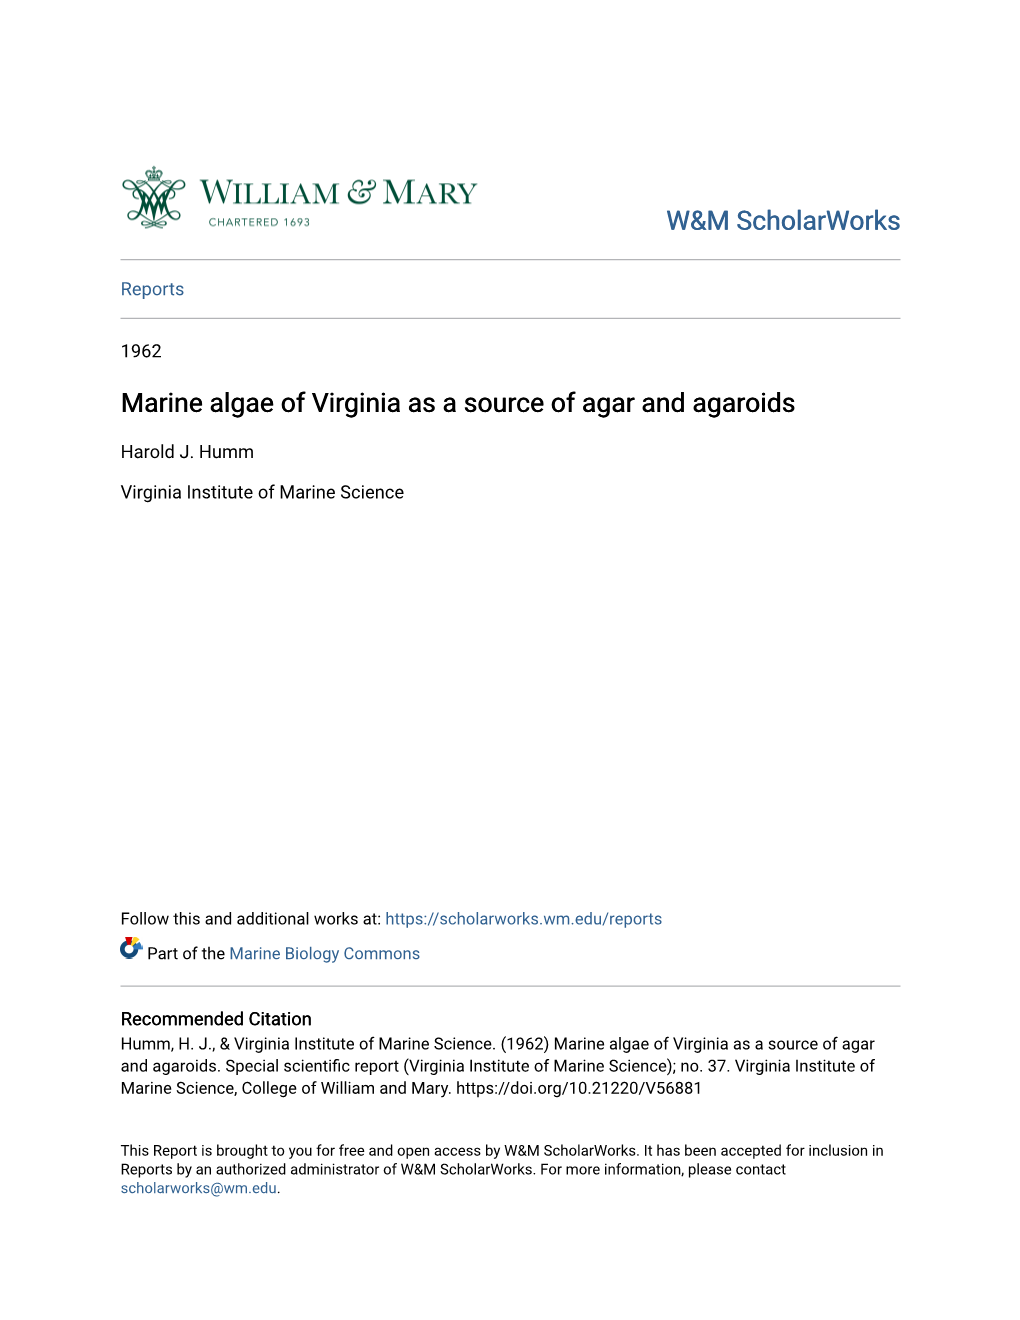 Marine Algae of Virginia As a Source of Agar and Agaroids